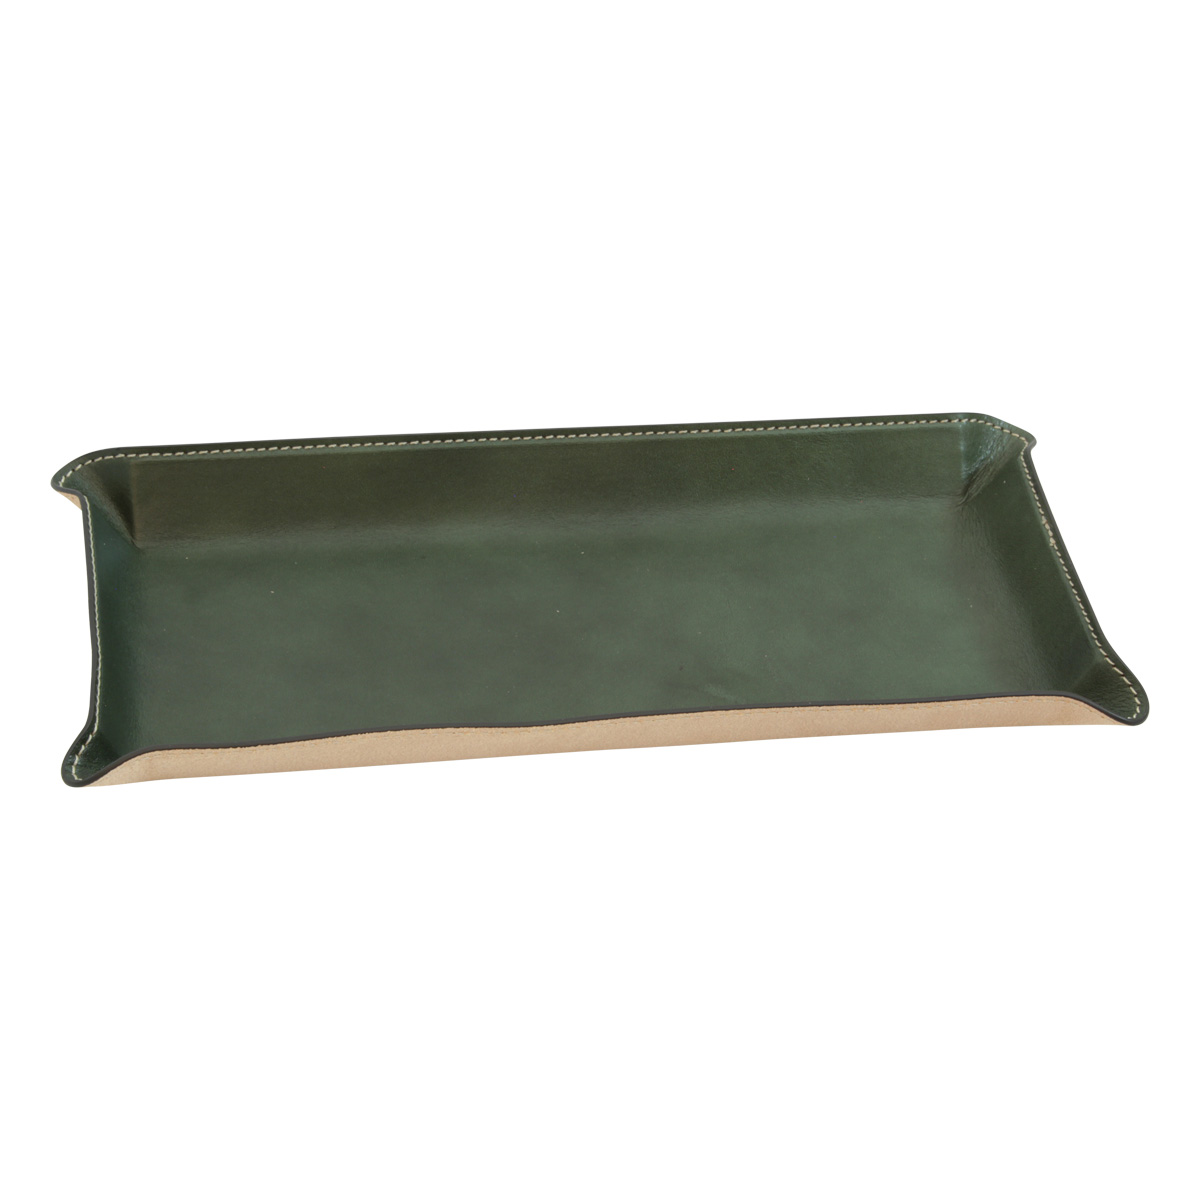 Leather desk tray - green | 762089VE UK | Old Angler Firenze